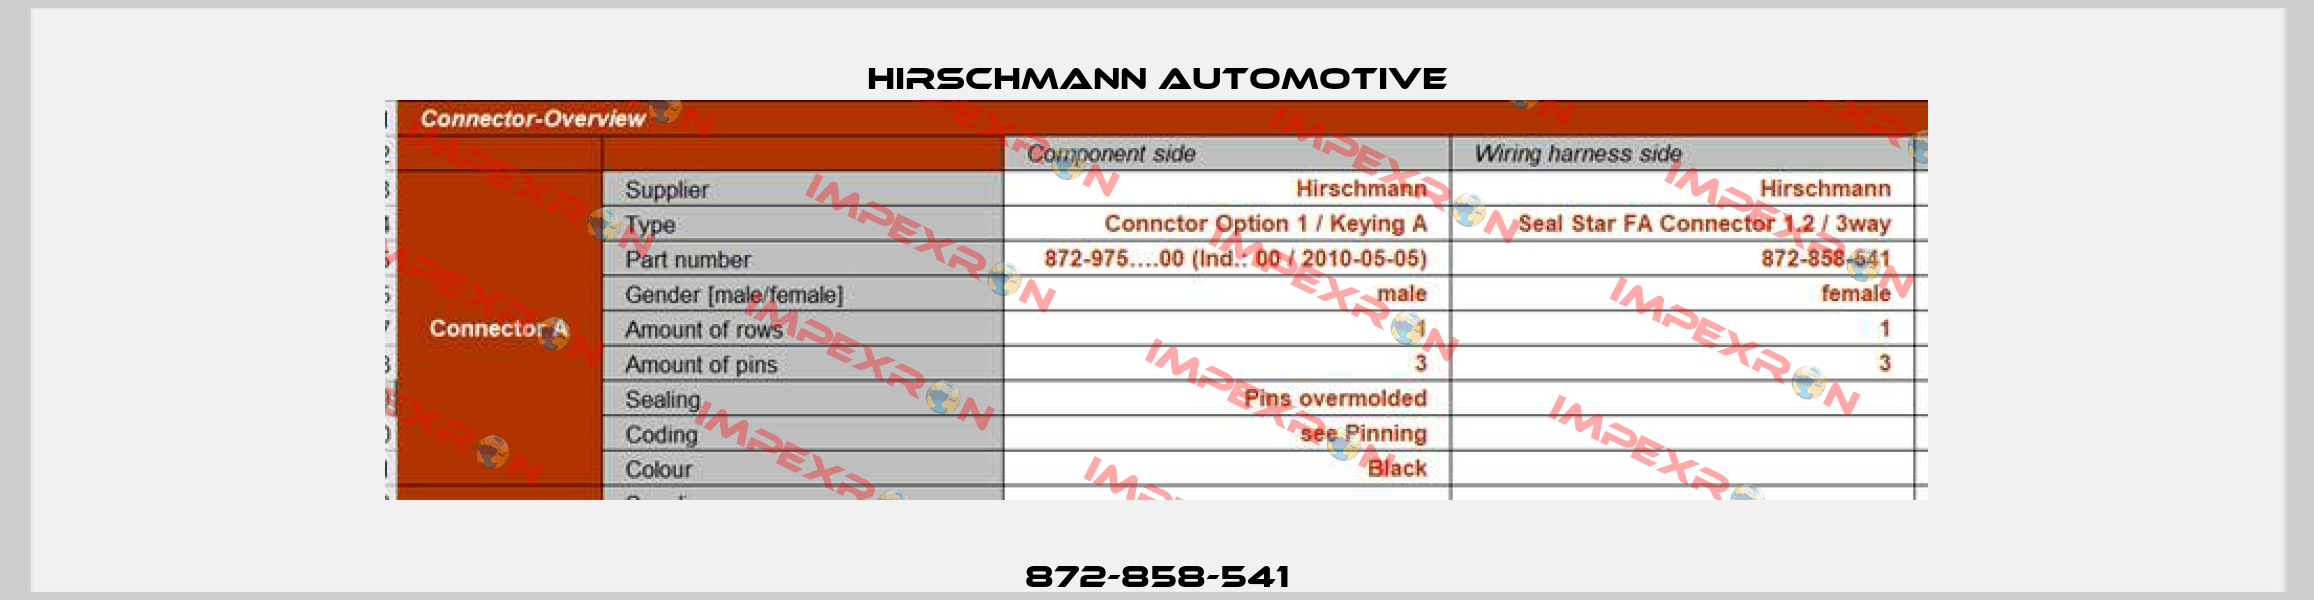 872-858-541 Hirschmann Automotive